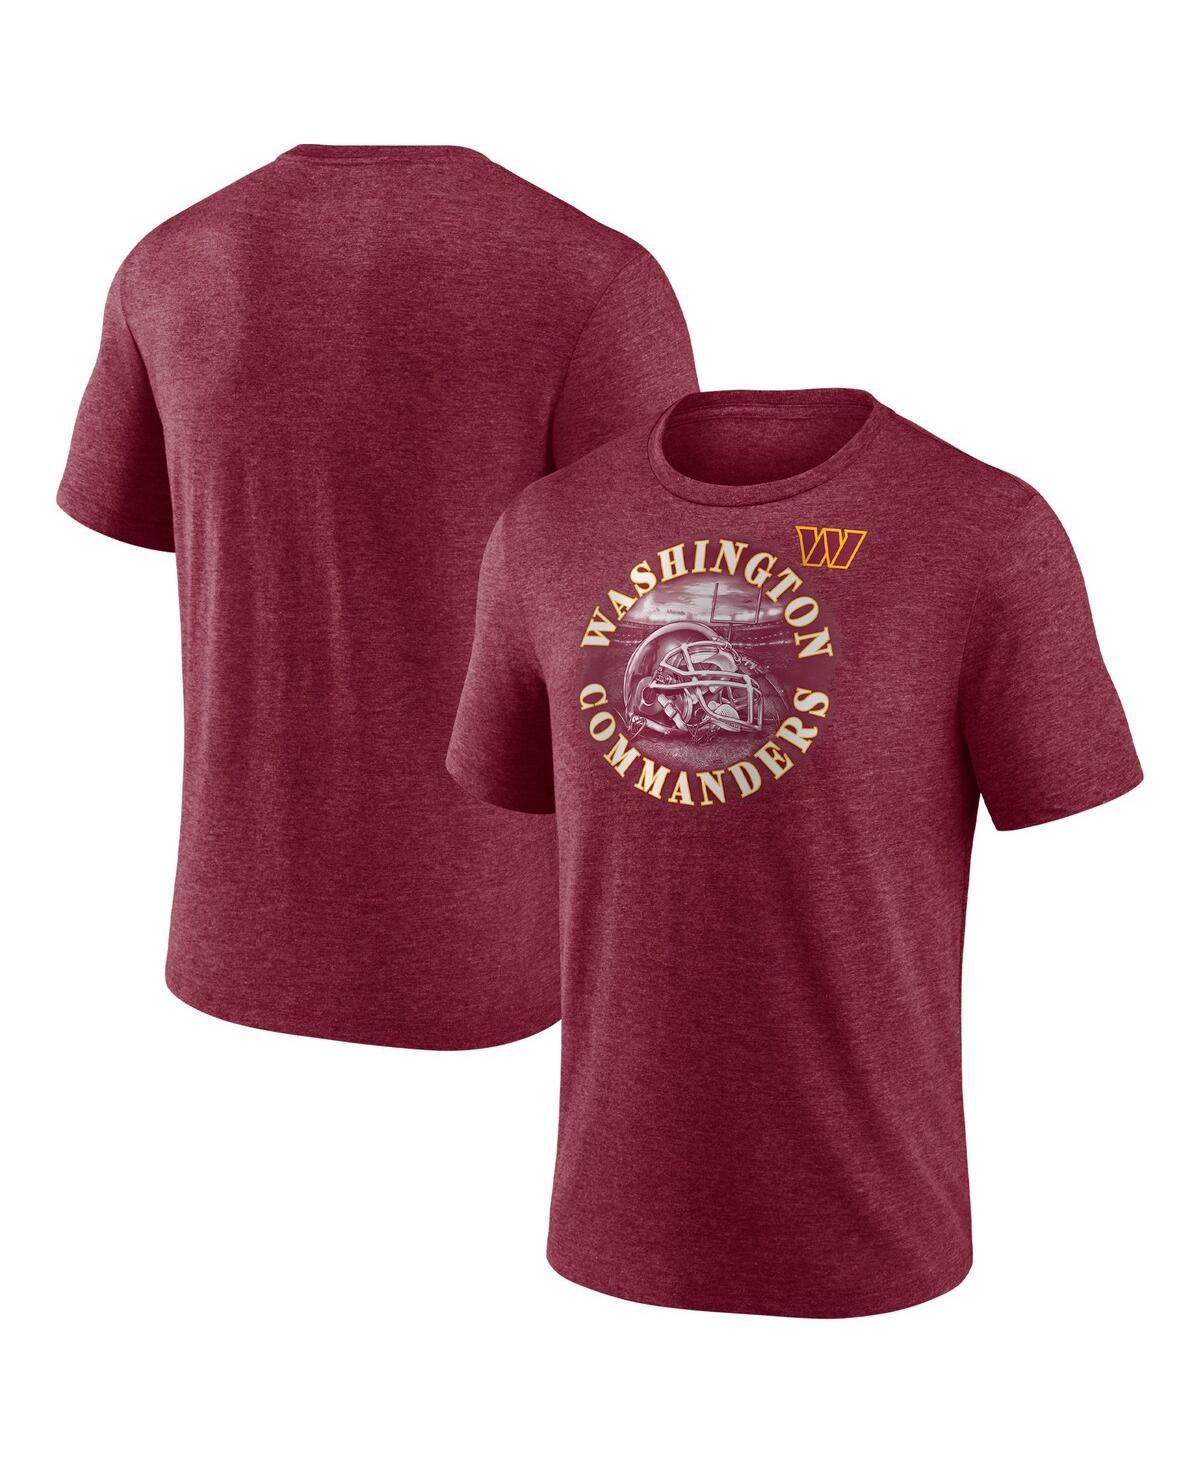 Shop Fanatics Men's  Heathered Burgundy Washington Commanders Sporting Chance T-shirt